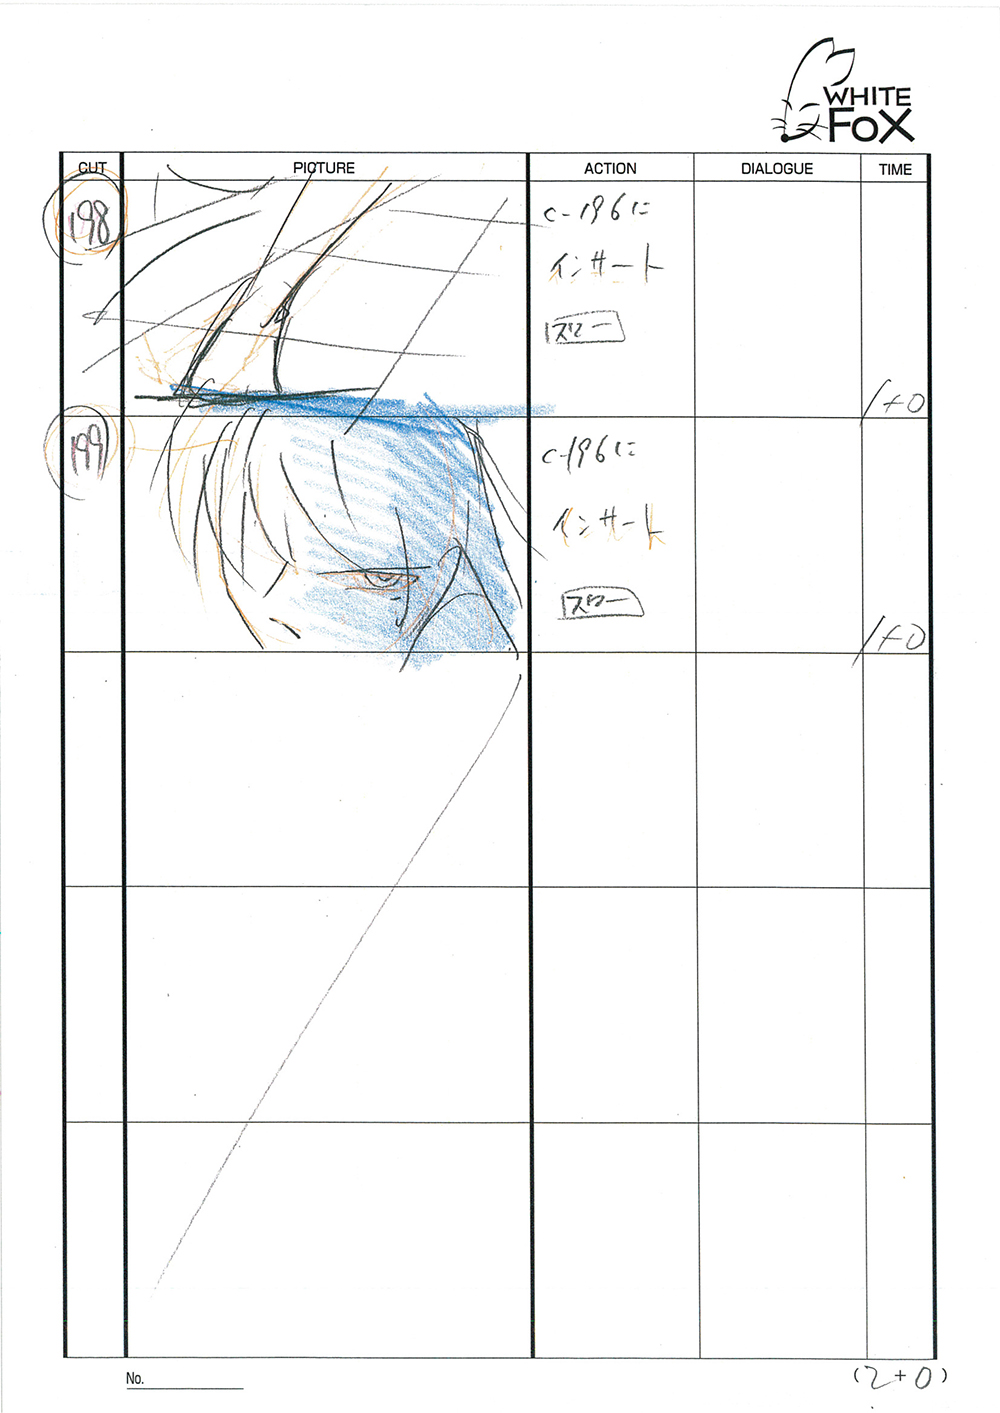 Akame ga Kill Episode 24 Storyboard Leak 115